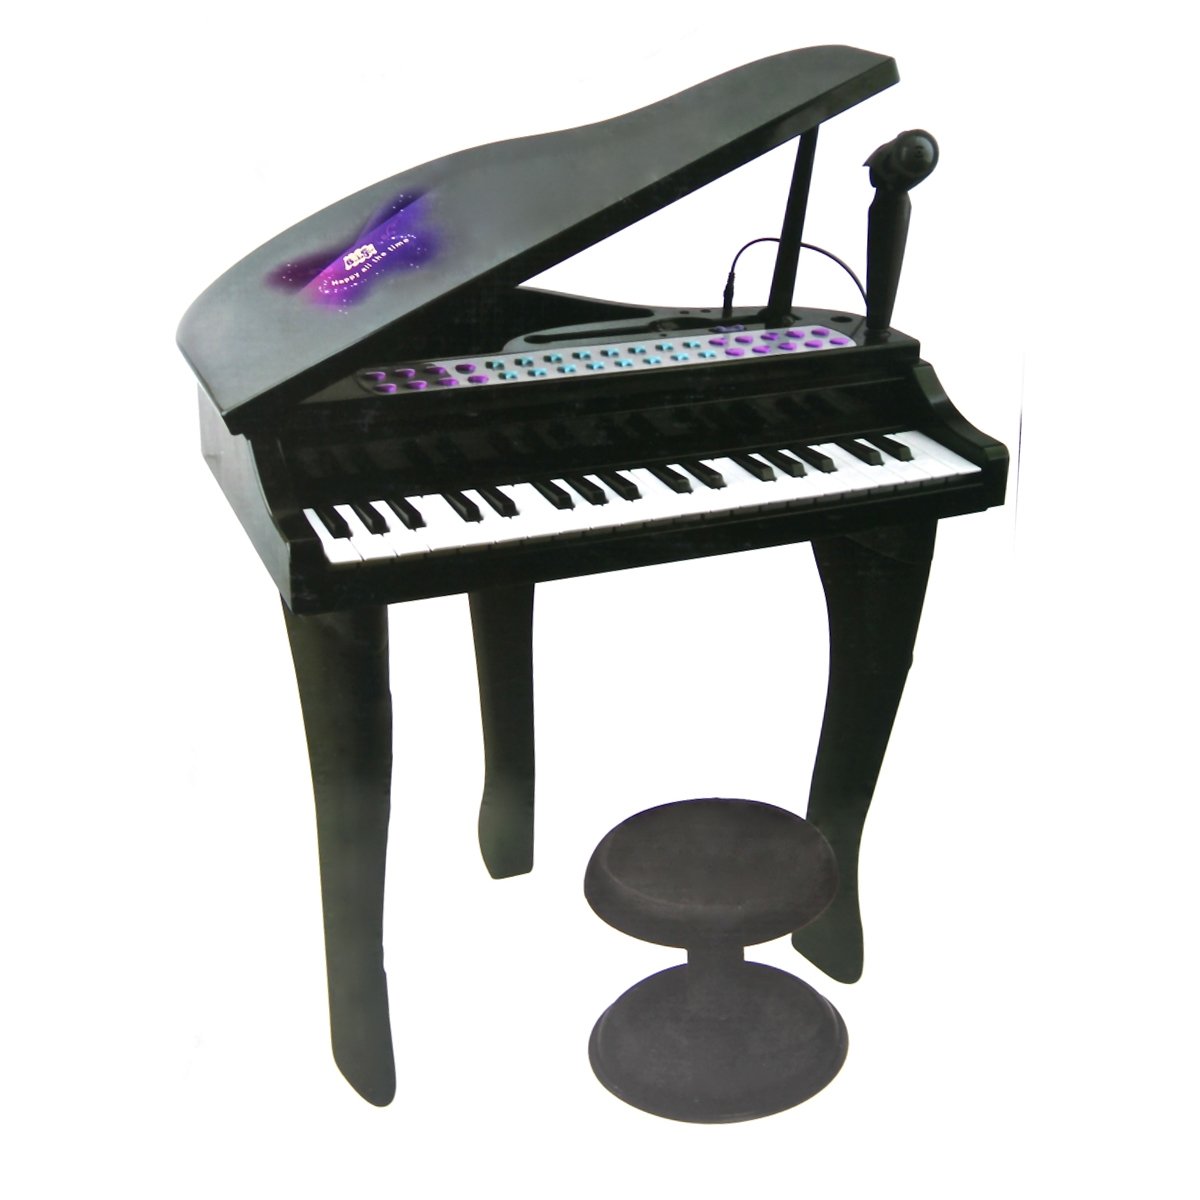 SM-88022 Vardem, Mini Piano 37 Tuşlu ve Mikrofonlu Siyah